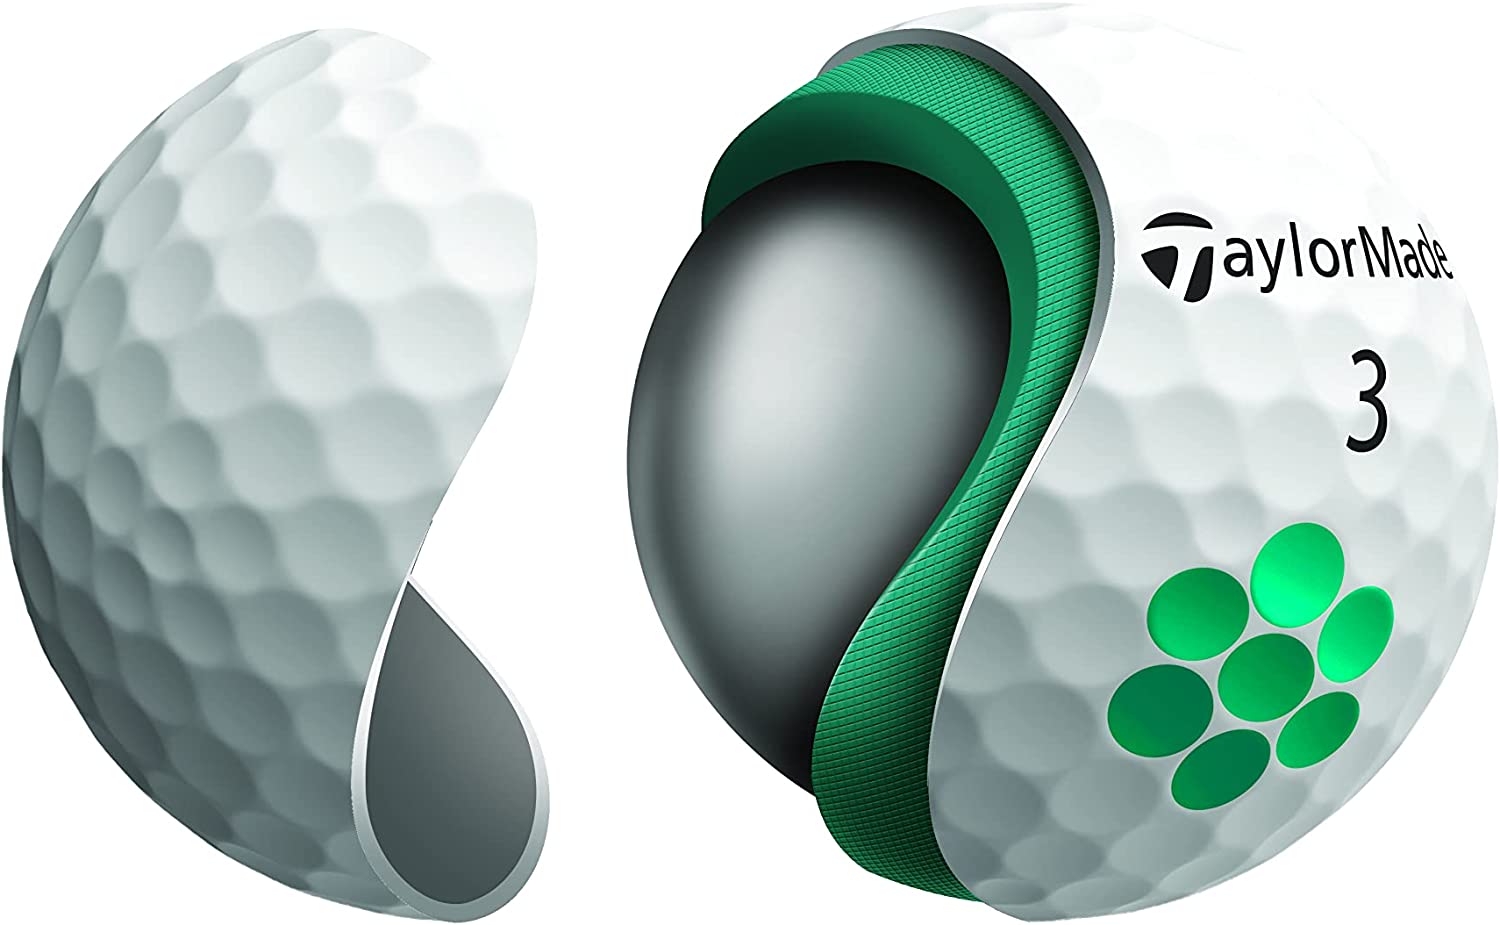 TaylorMade Soft Response Golf Balls White - image 4 of 5